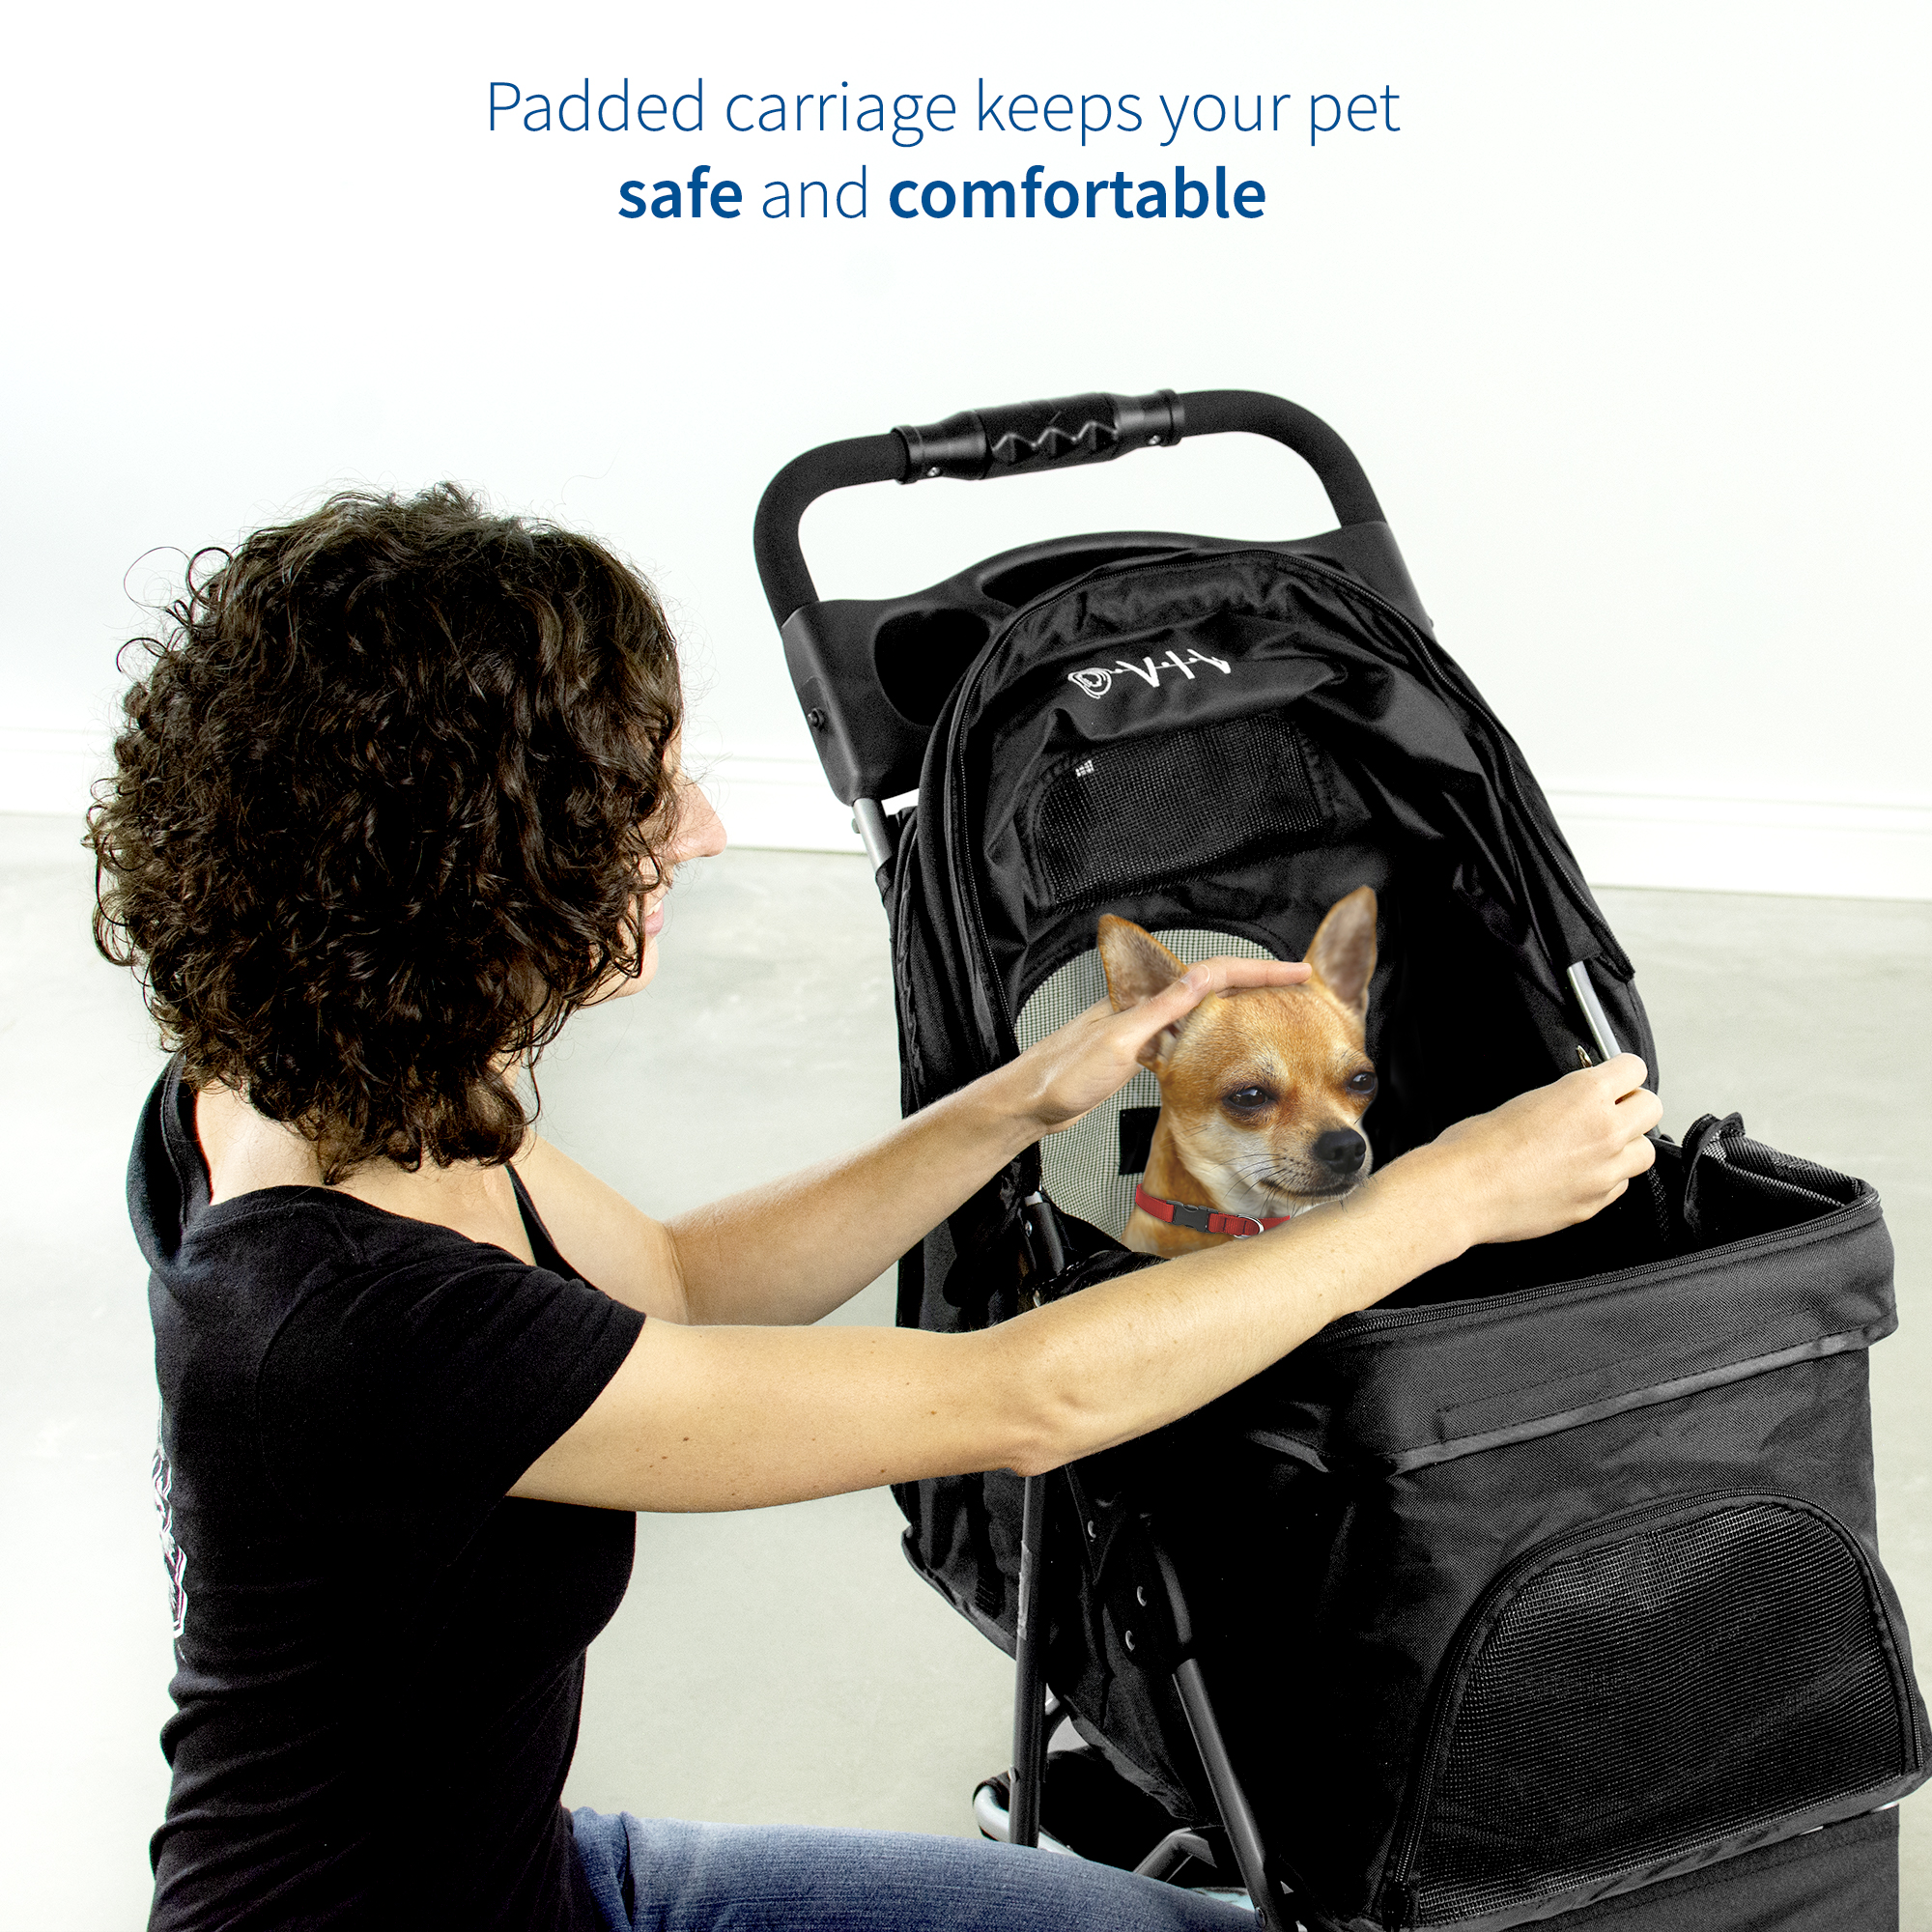 VIVO Black 3 Wheel Pet Stroller / Cat & Dog Foldable Carrier Strolling Cart - image 5 of 6